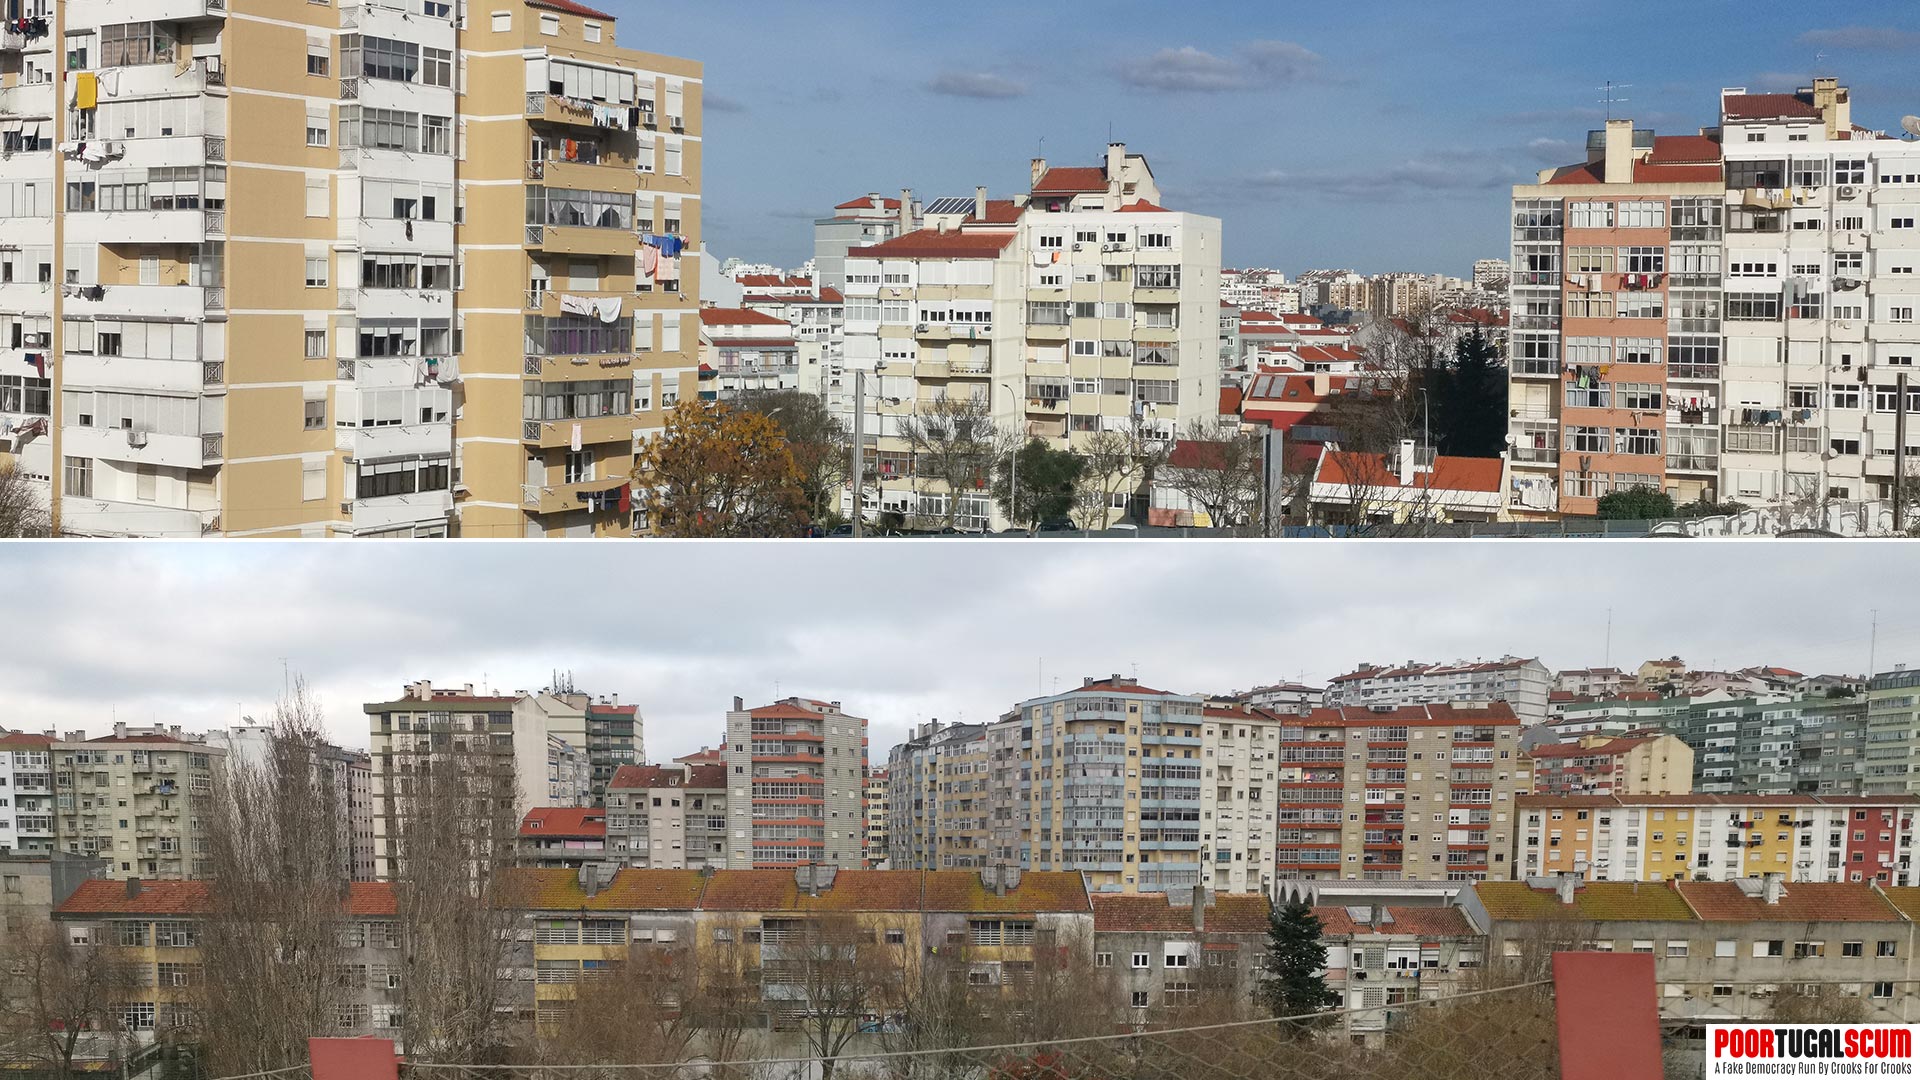 Portugal is a slum made of concrete.